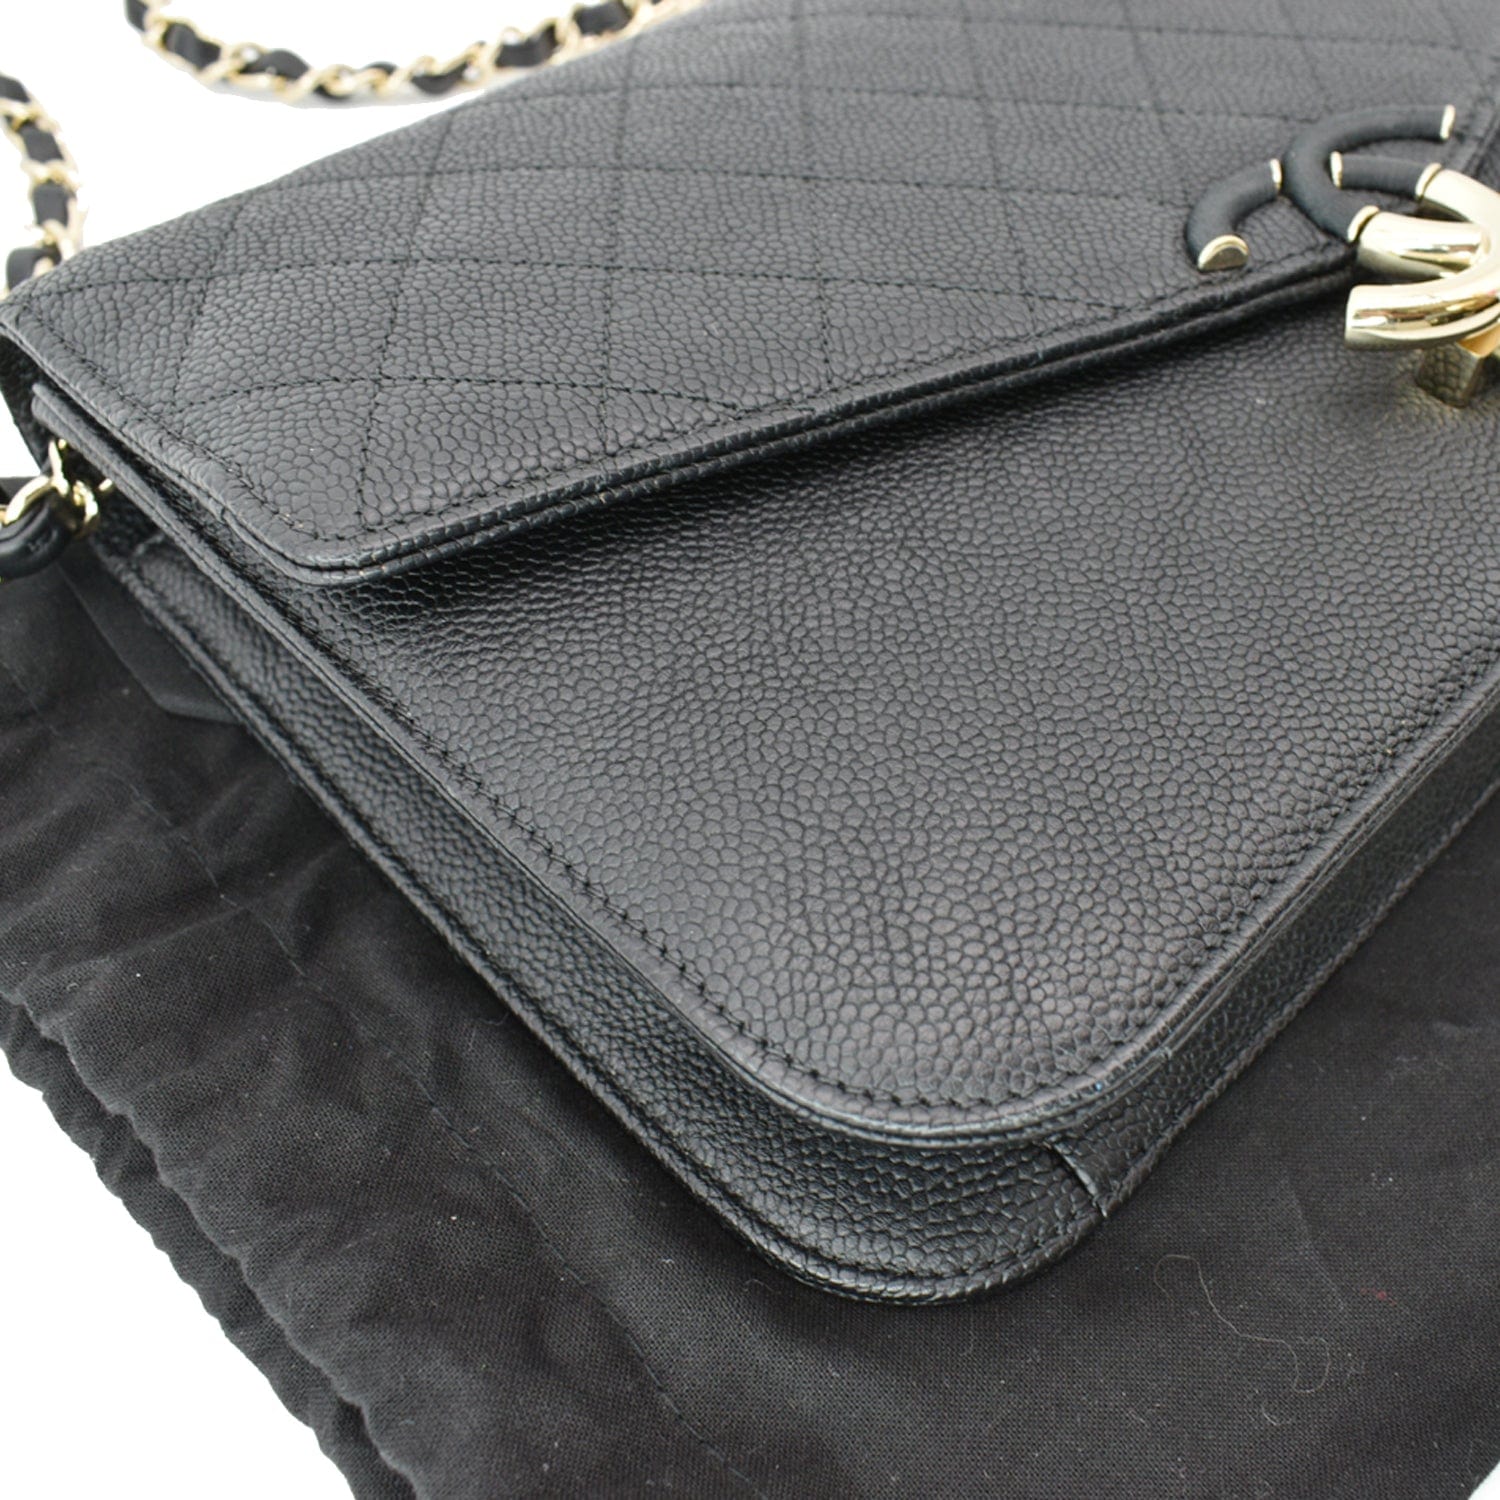 Chanel Chanel Black Caviar Leather CC Logo Chain Mini Crossbody Bag